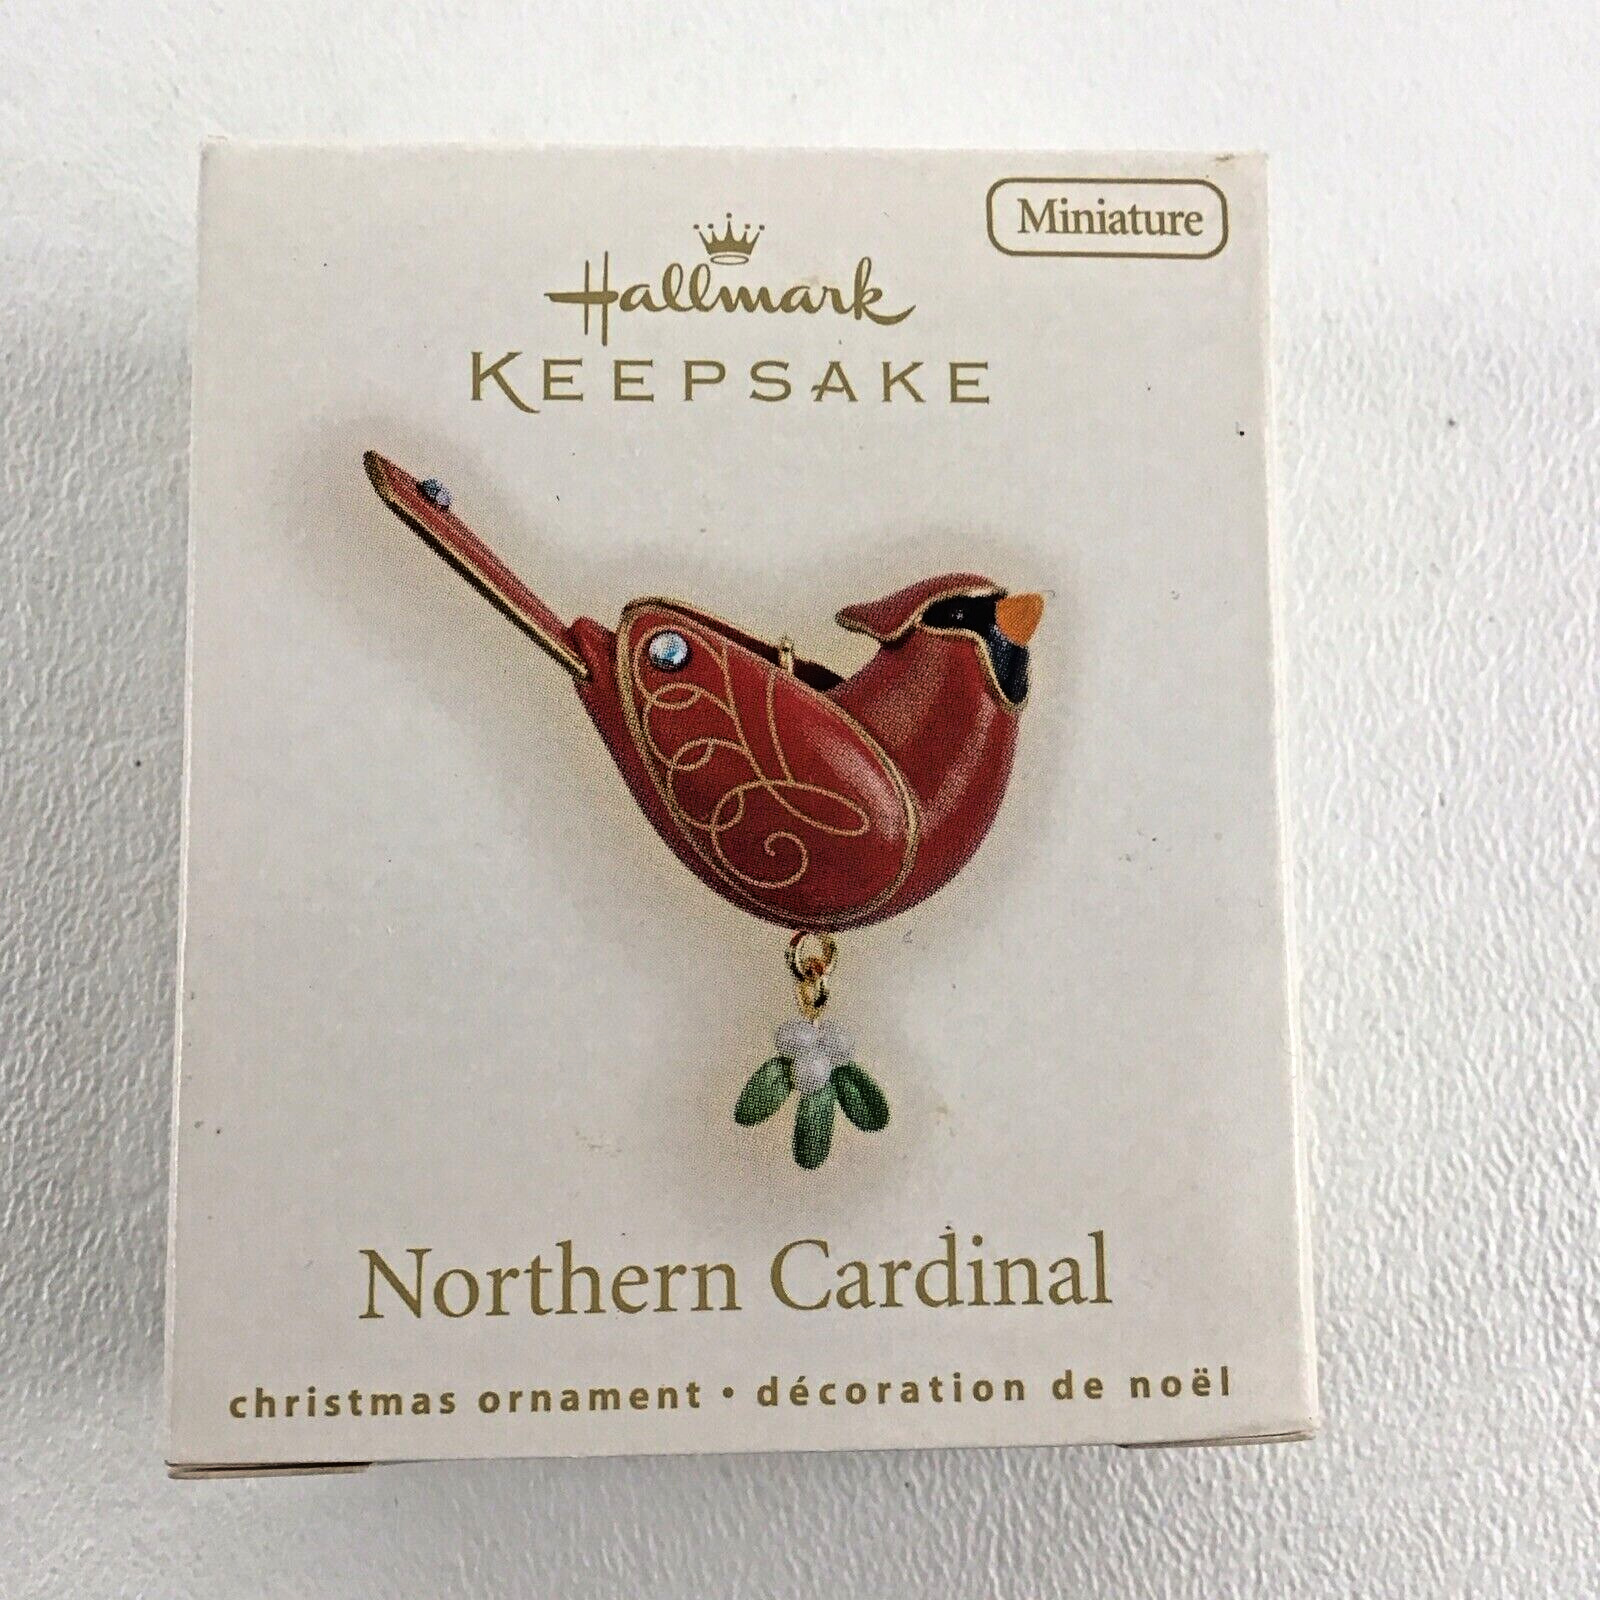 Hallmark Keepsake Ornament Beauty Of Birds Miniature Northern Cardinal New 2009